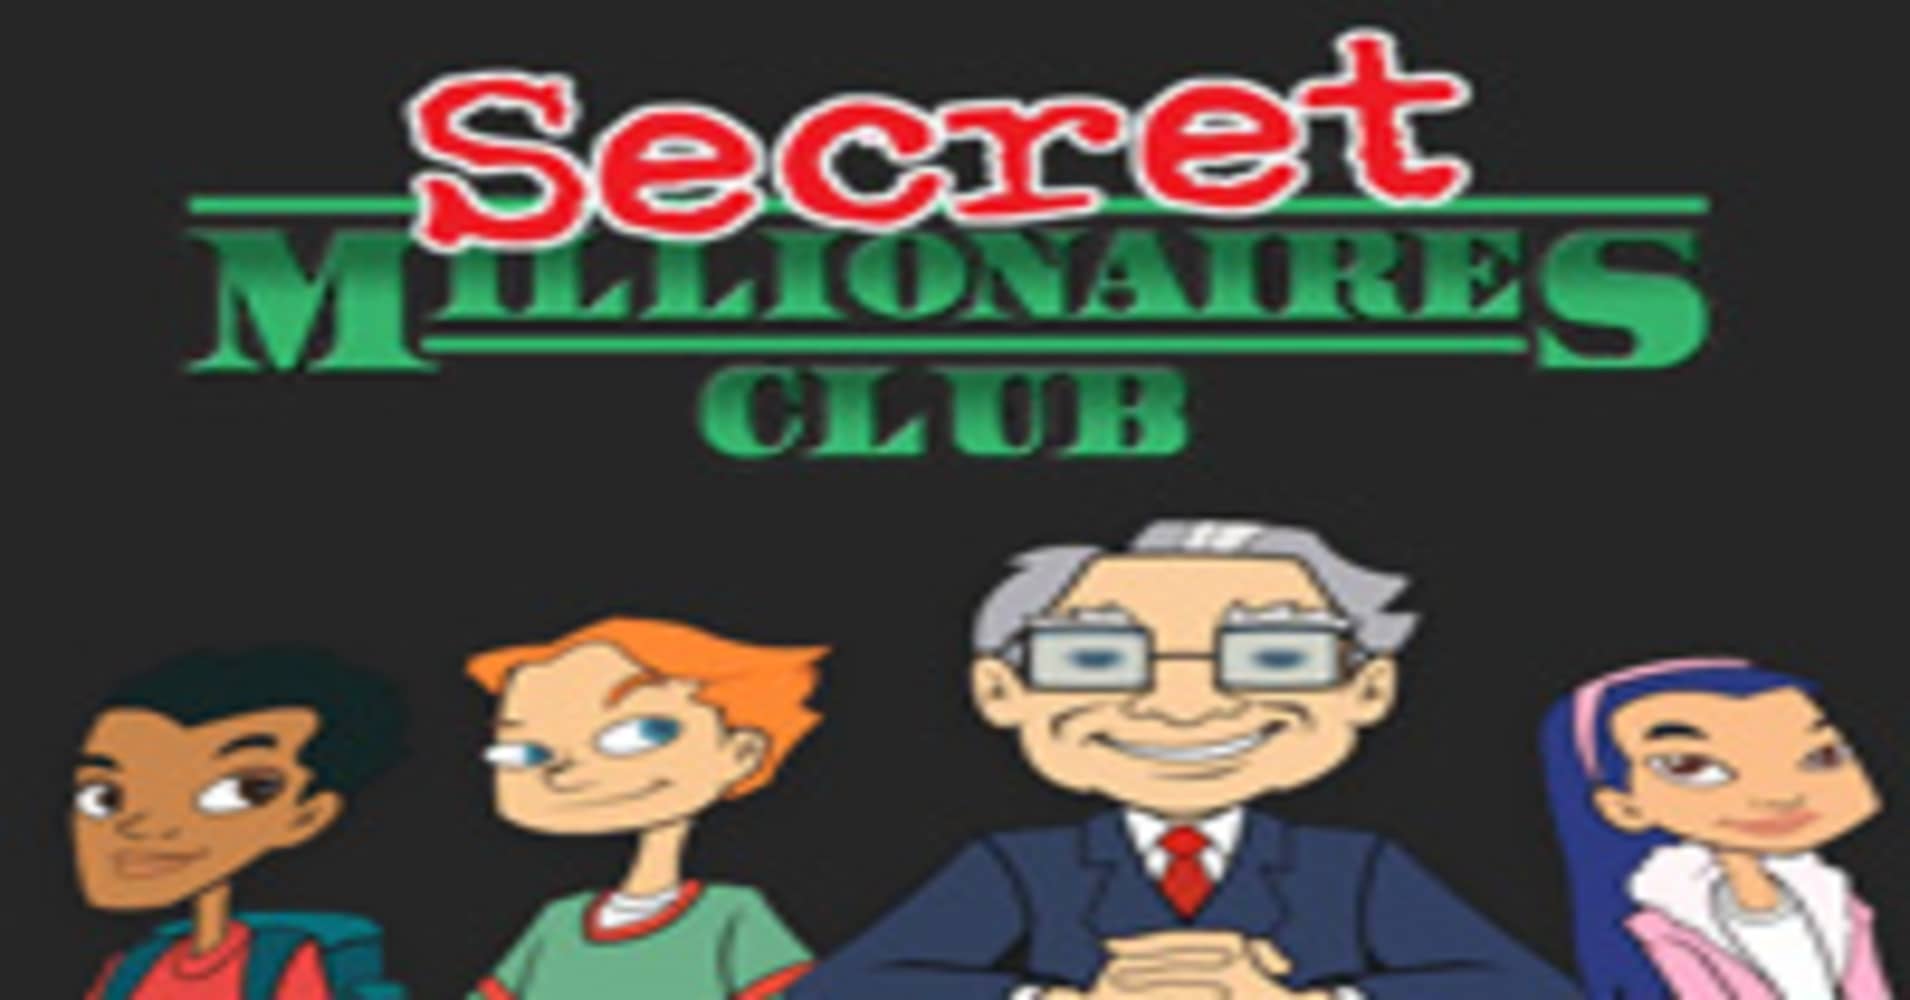 Warren Buffett and the Secret Millionaires Club